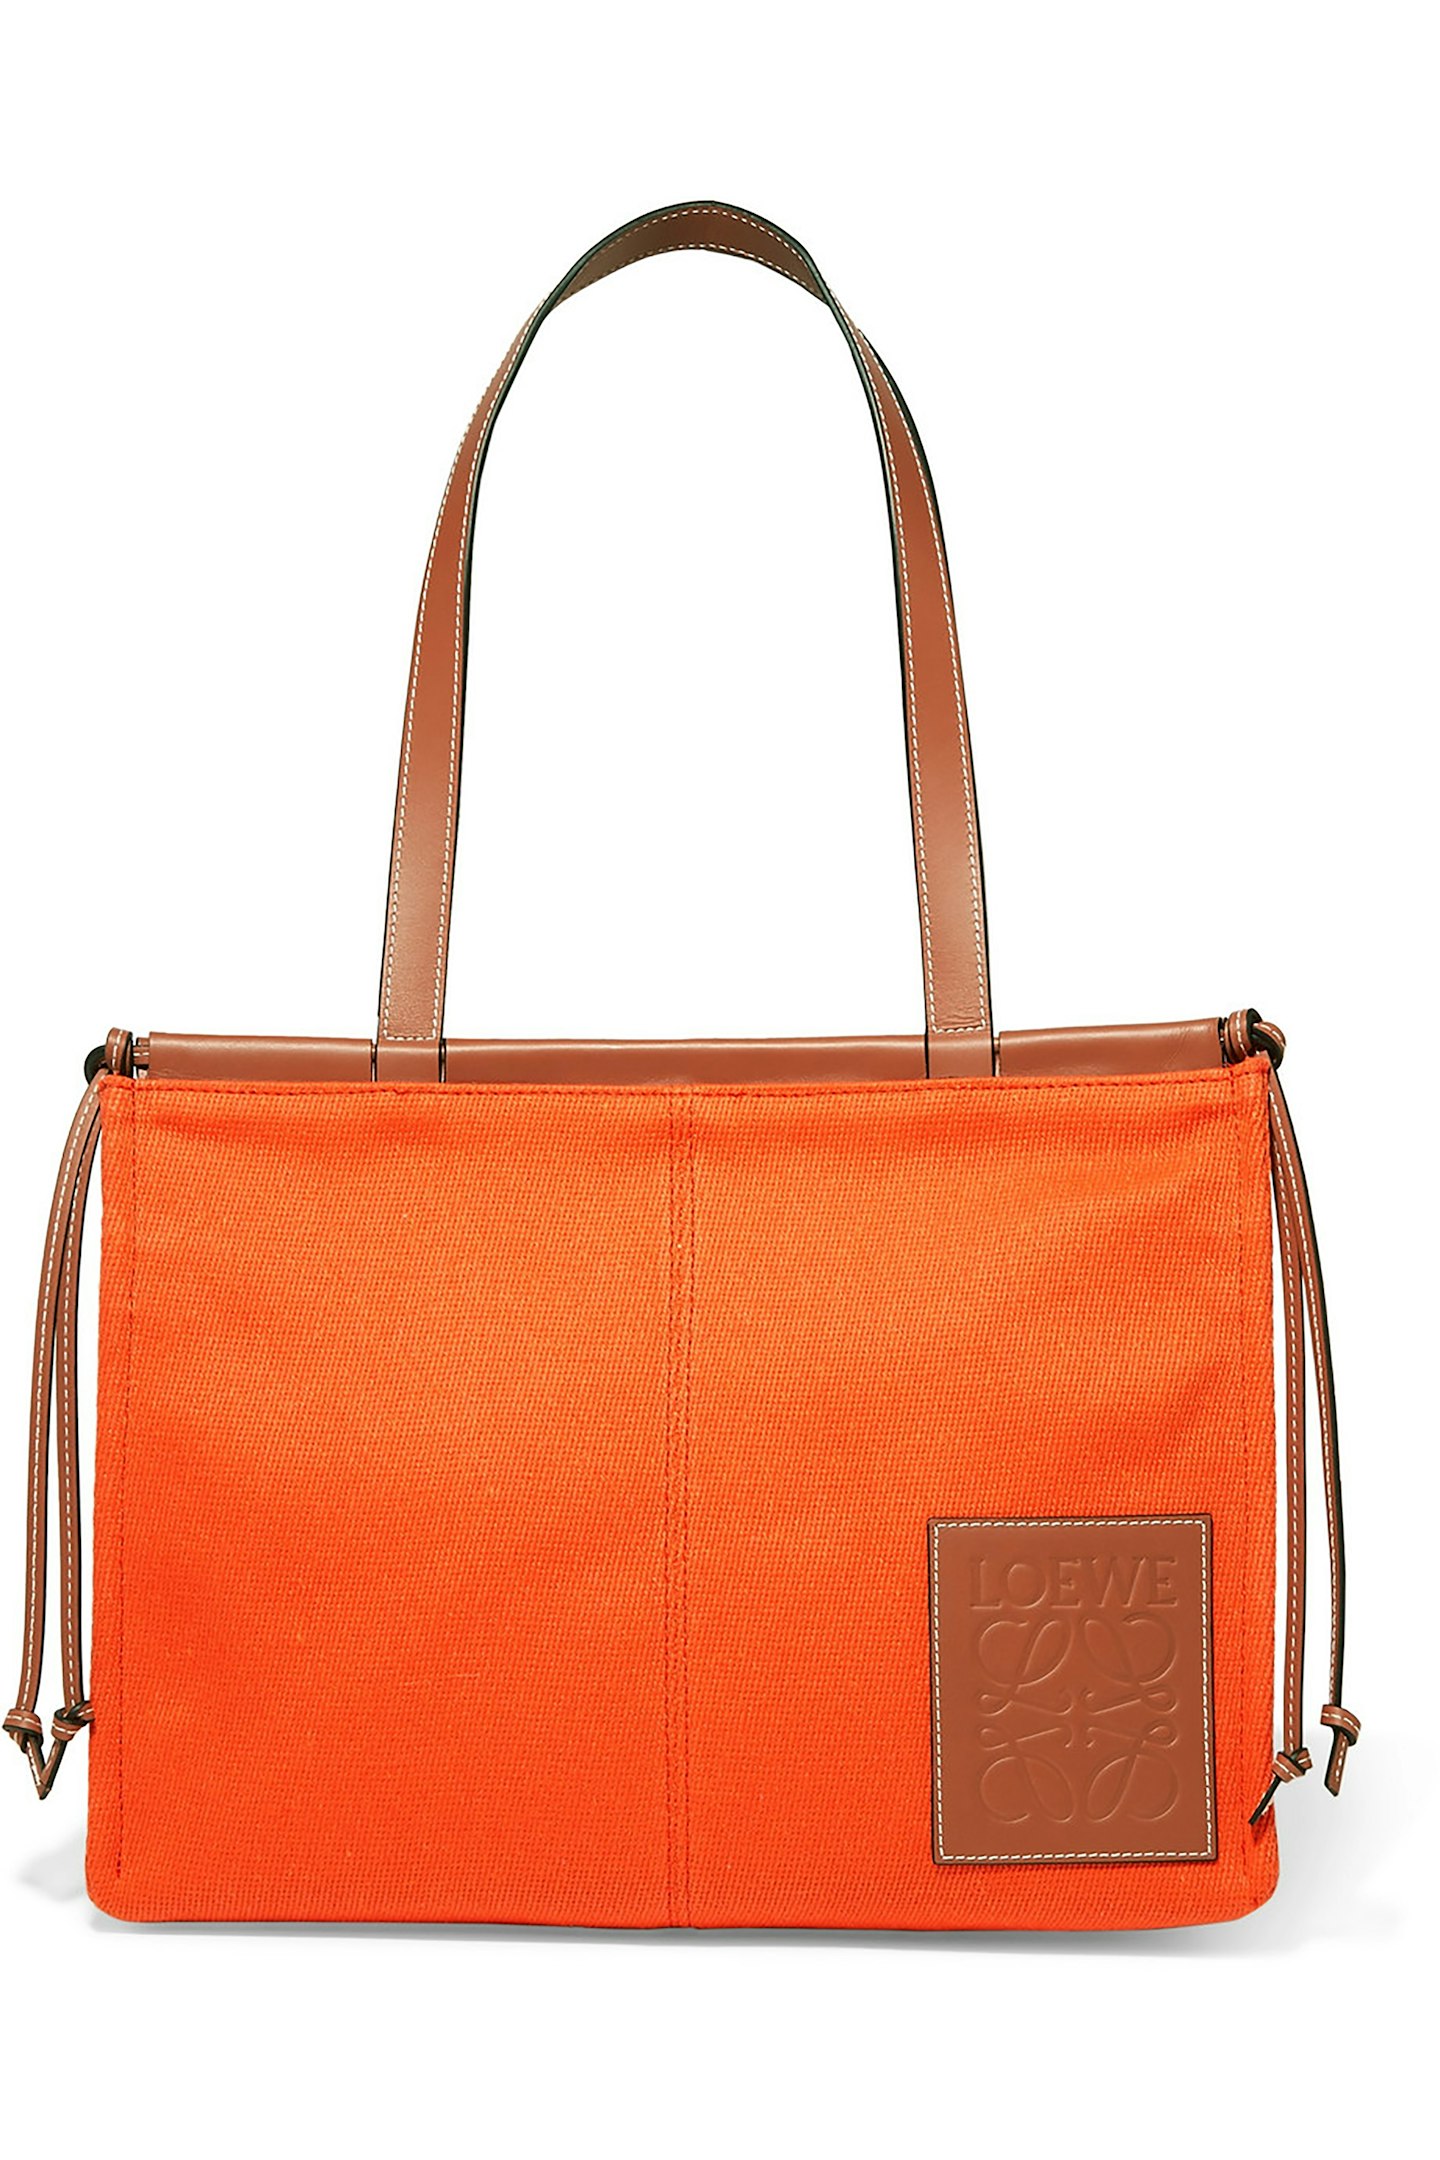 Loewe orange bag